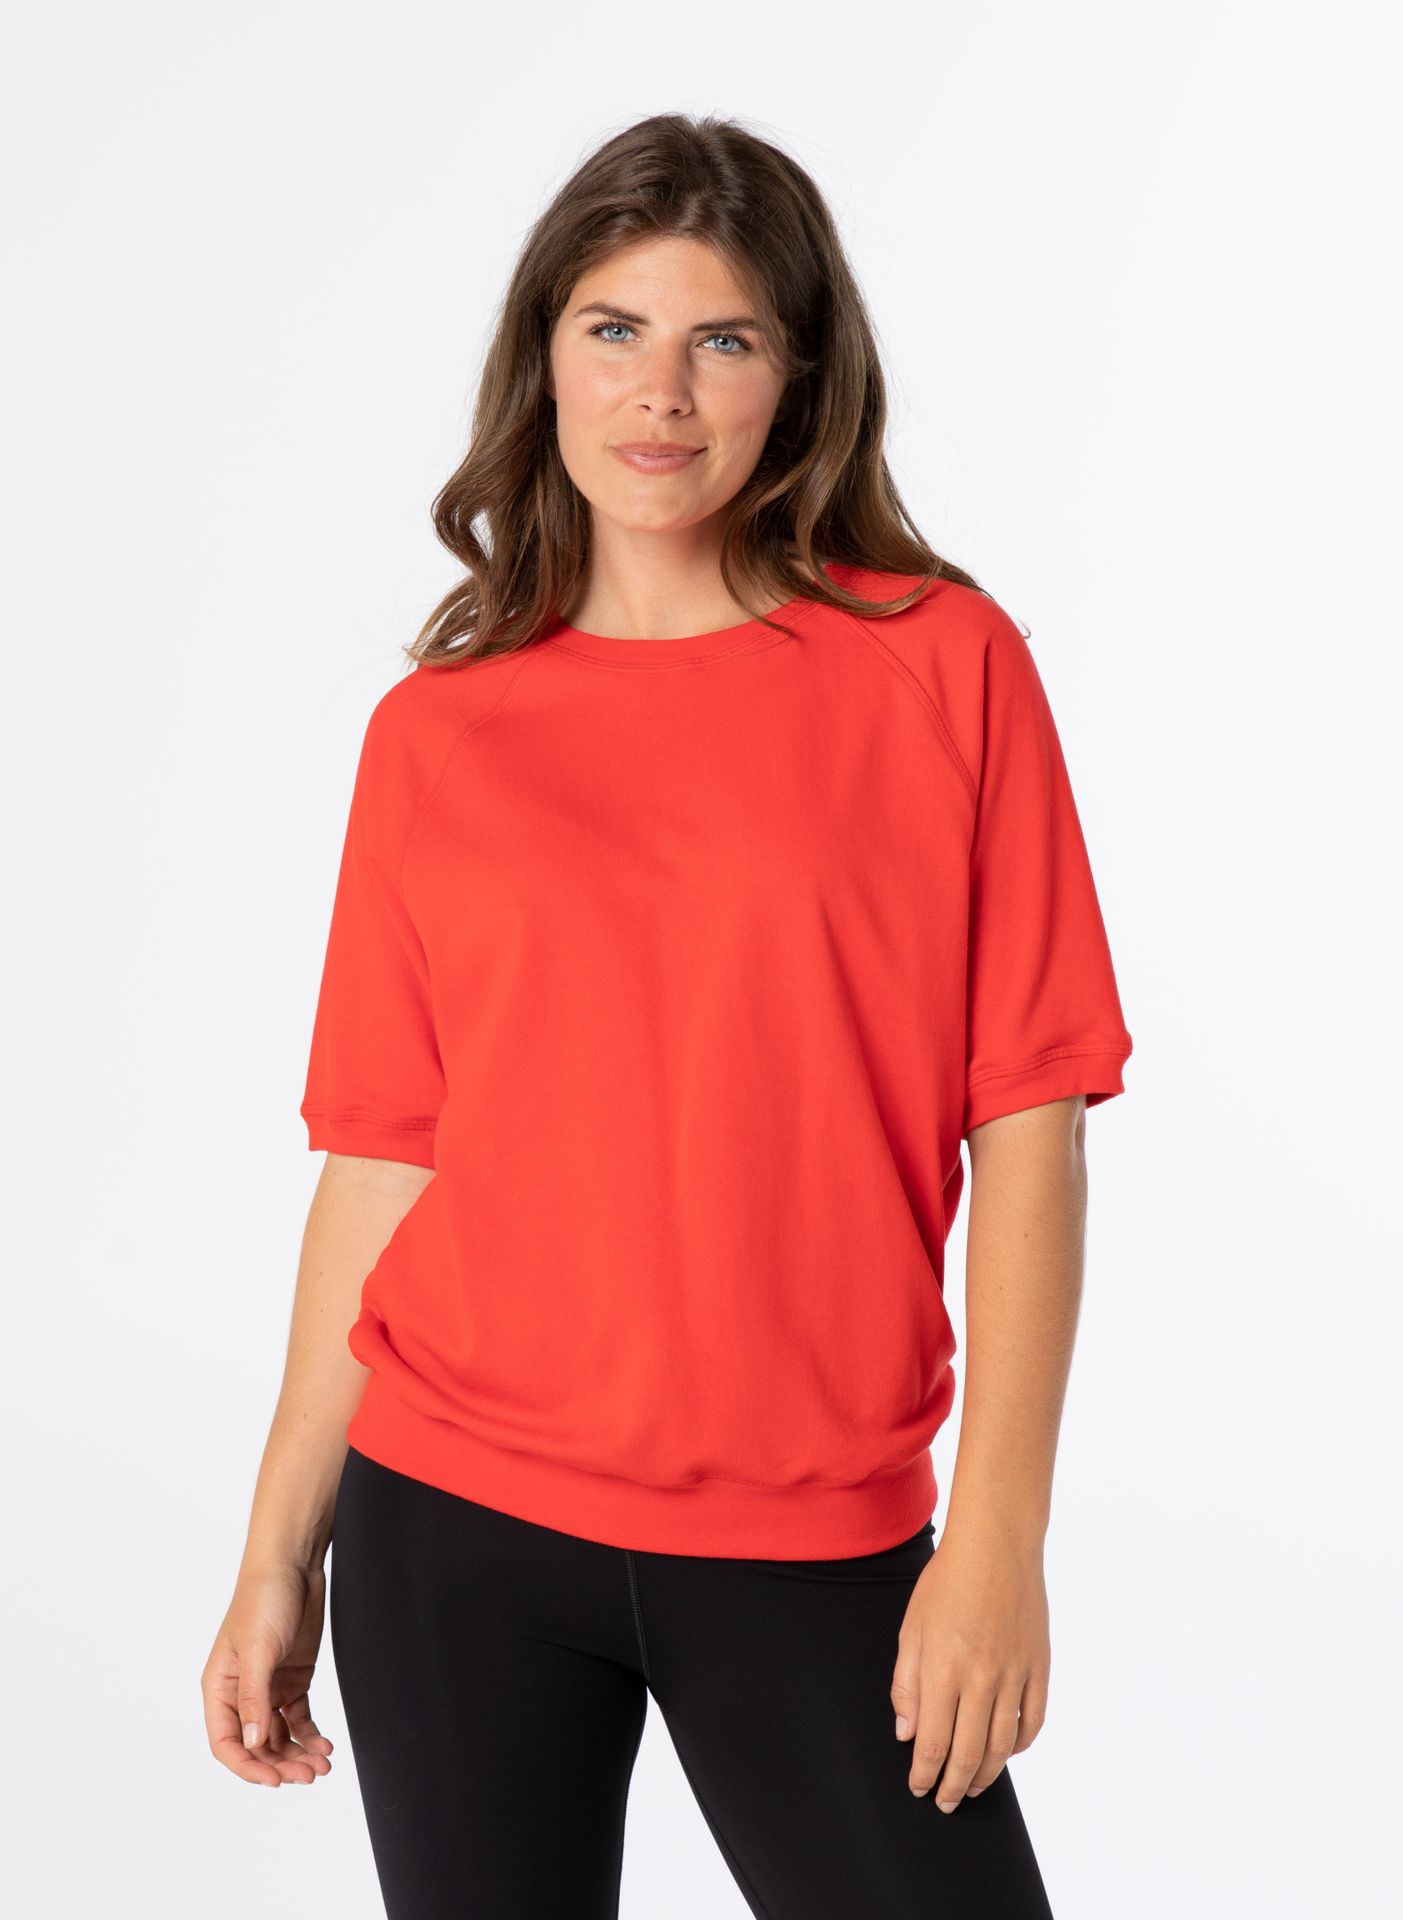 Norah Jumper - Activewear red 211905-600